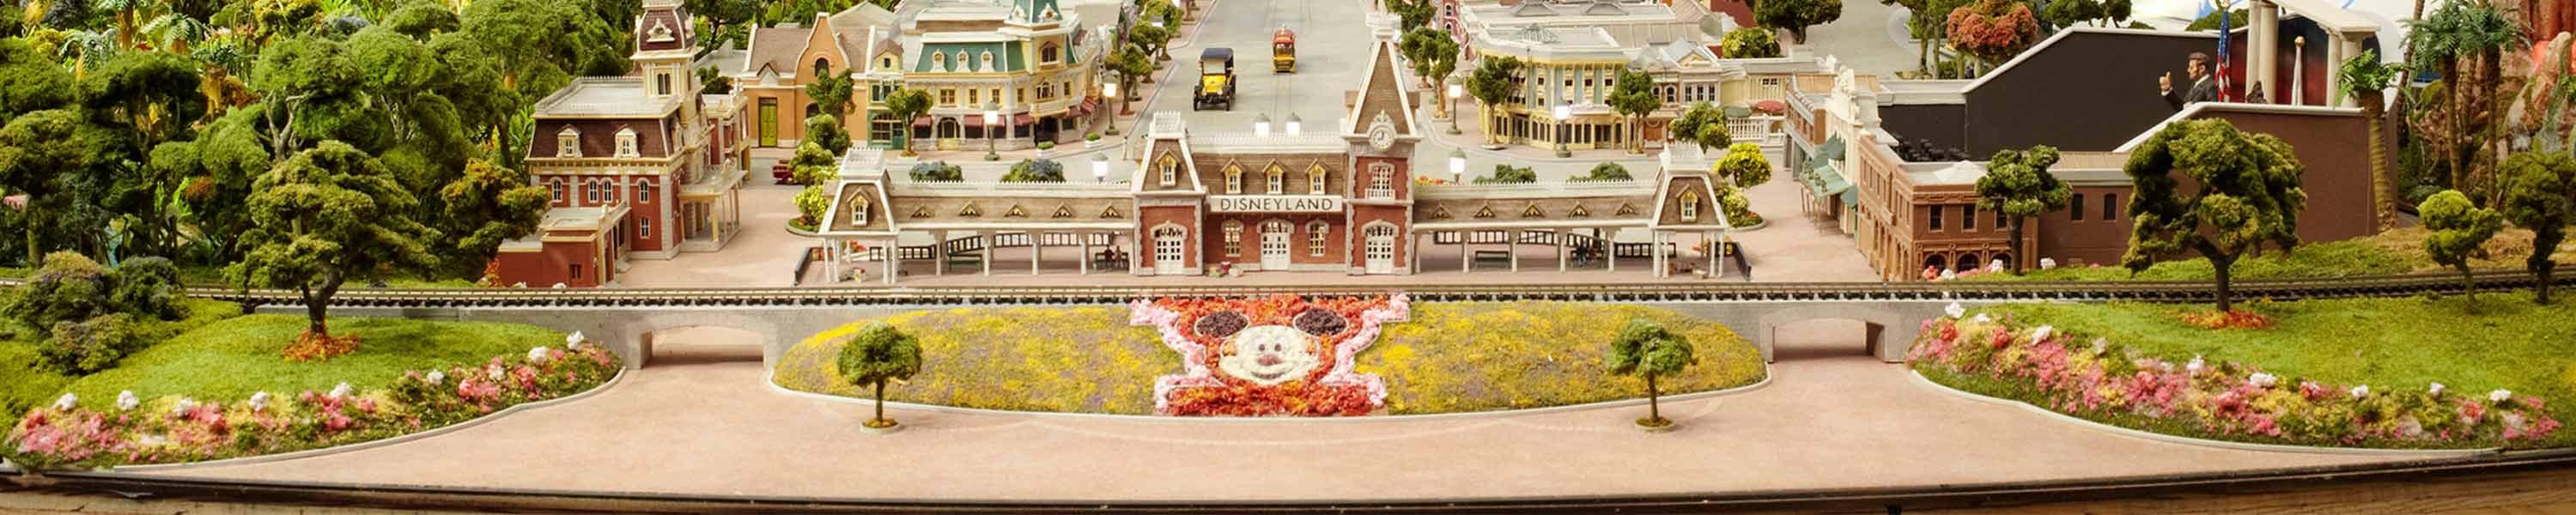 Model of Disneyland  